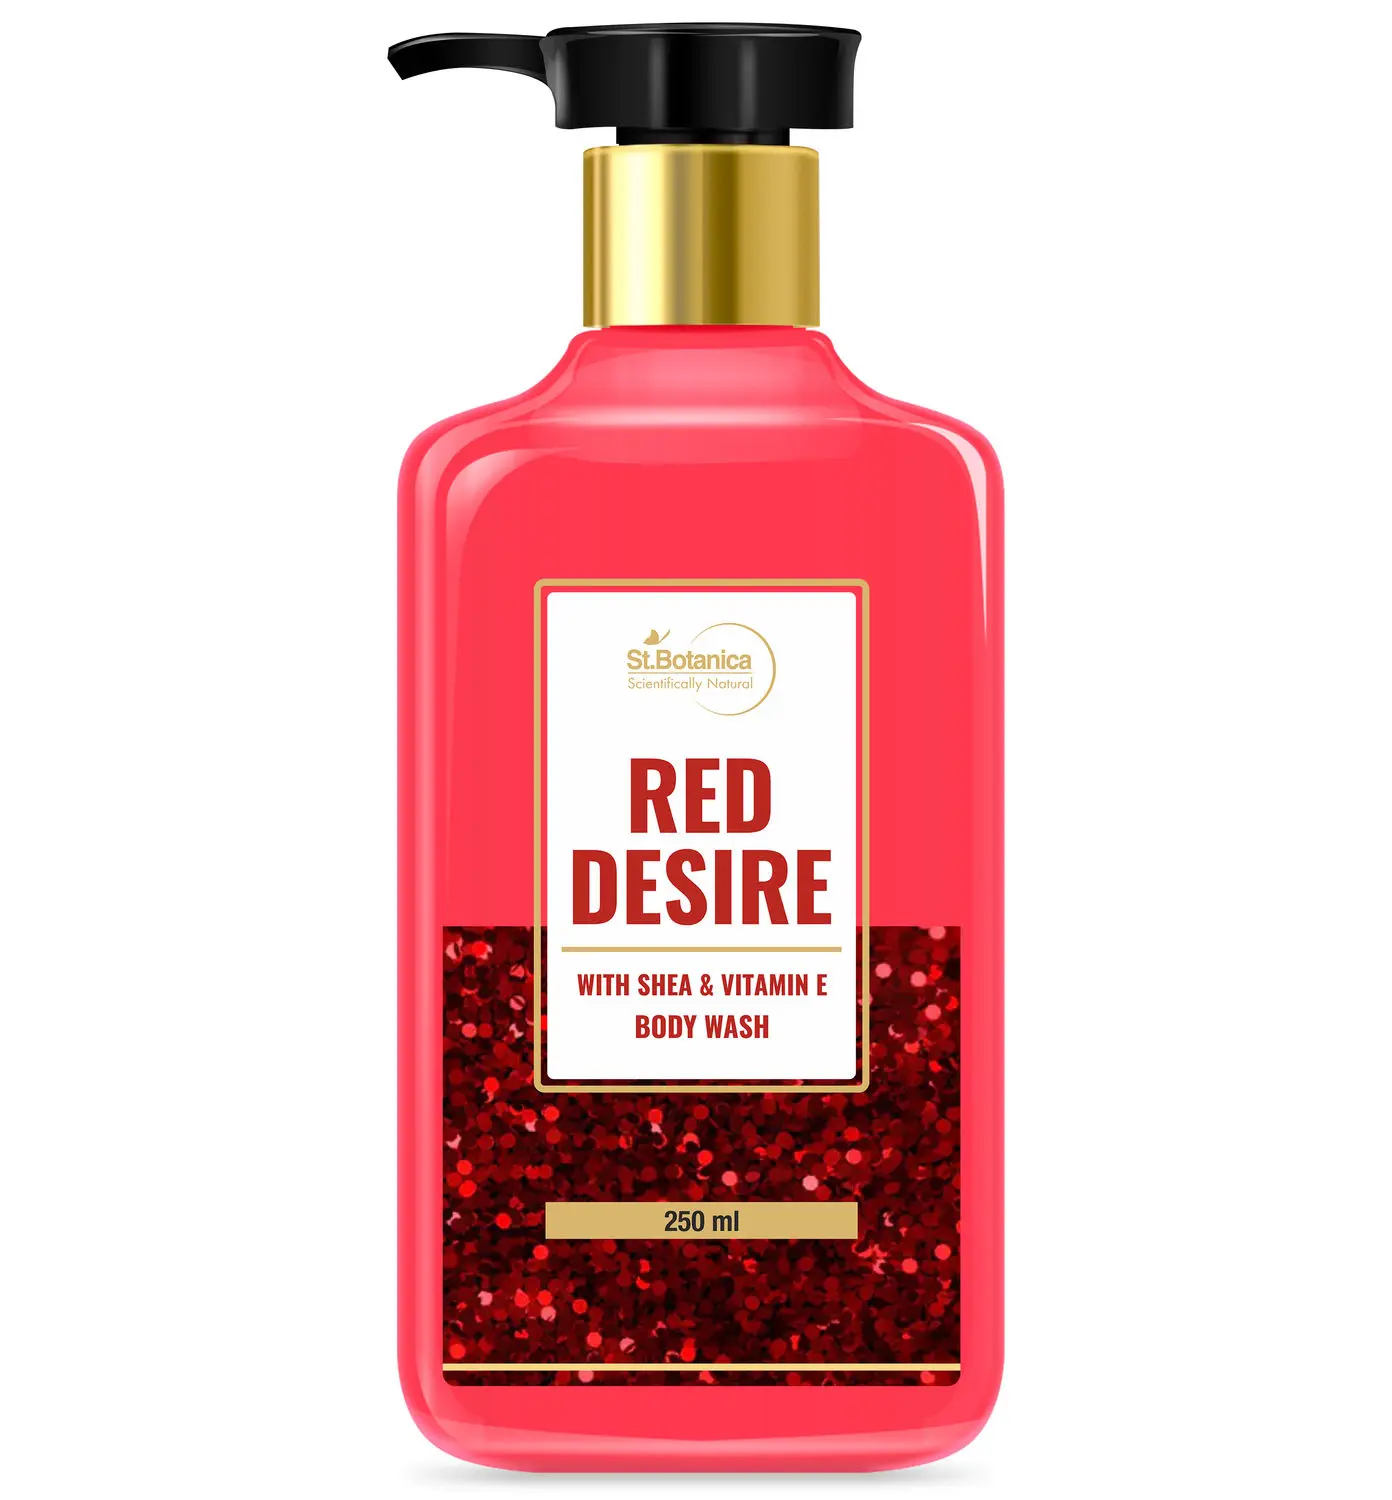 St Botanica Red Desire Body Wash - With Shea & Vitamin E (Shower Gel), 250 ml